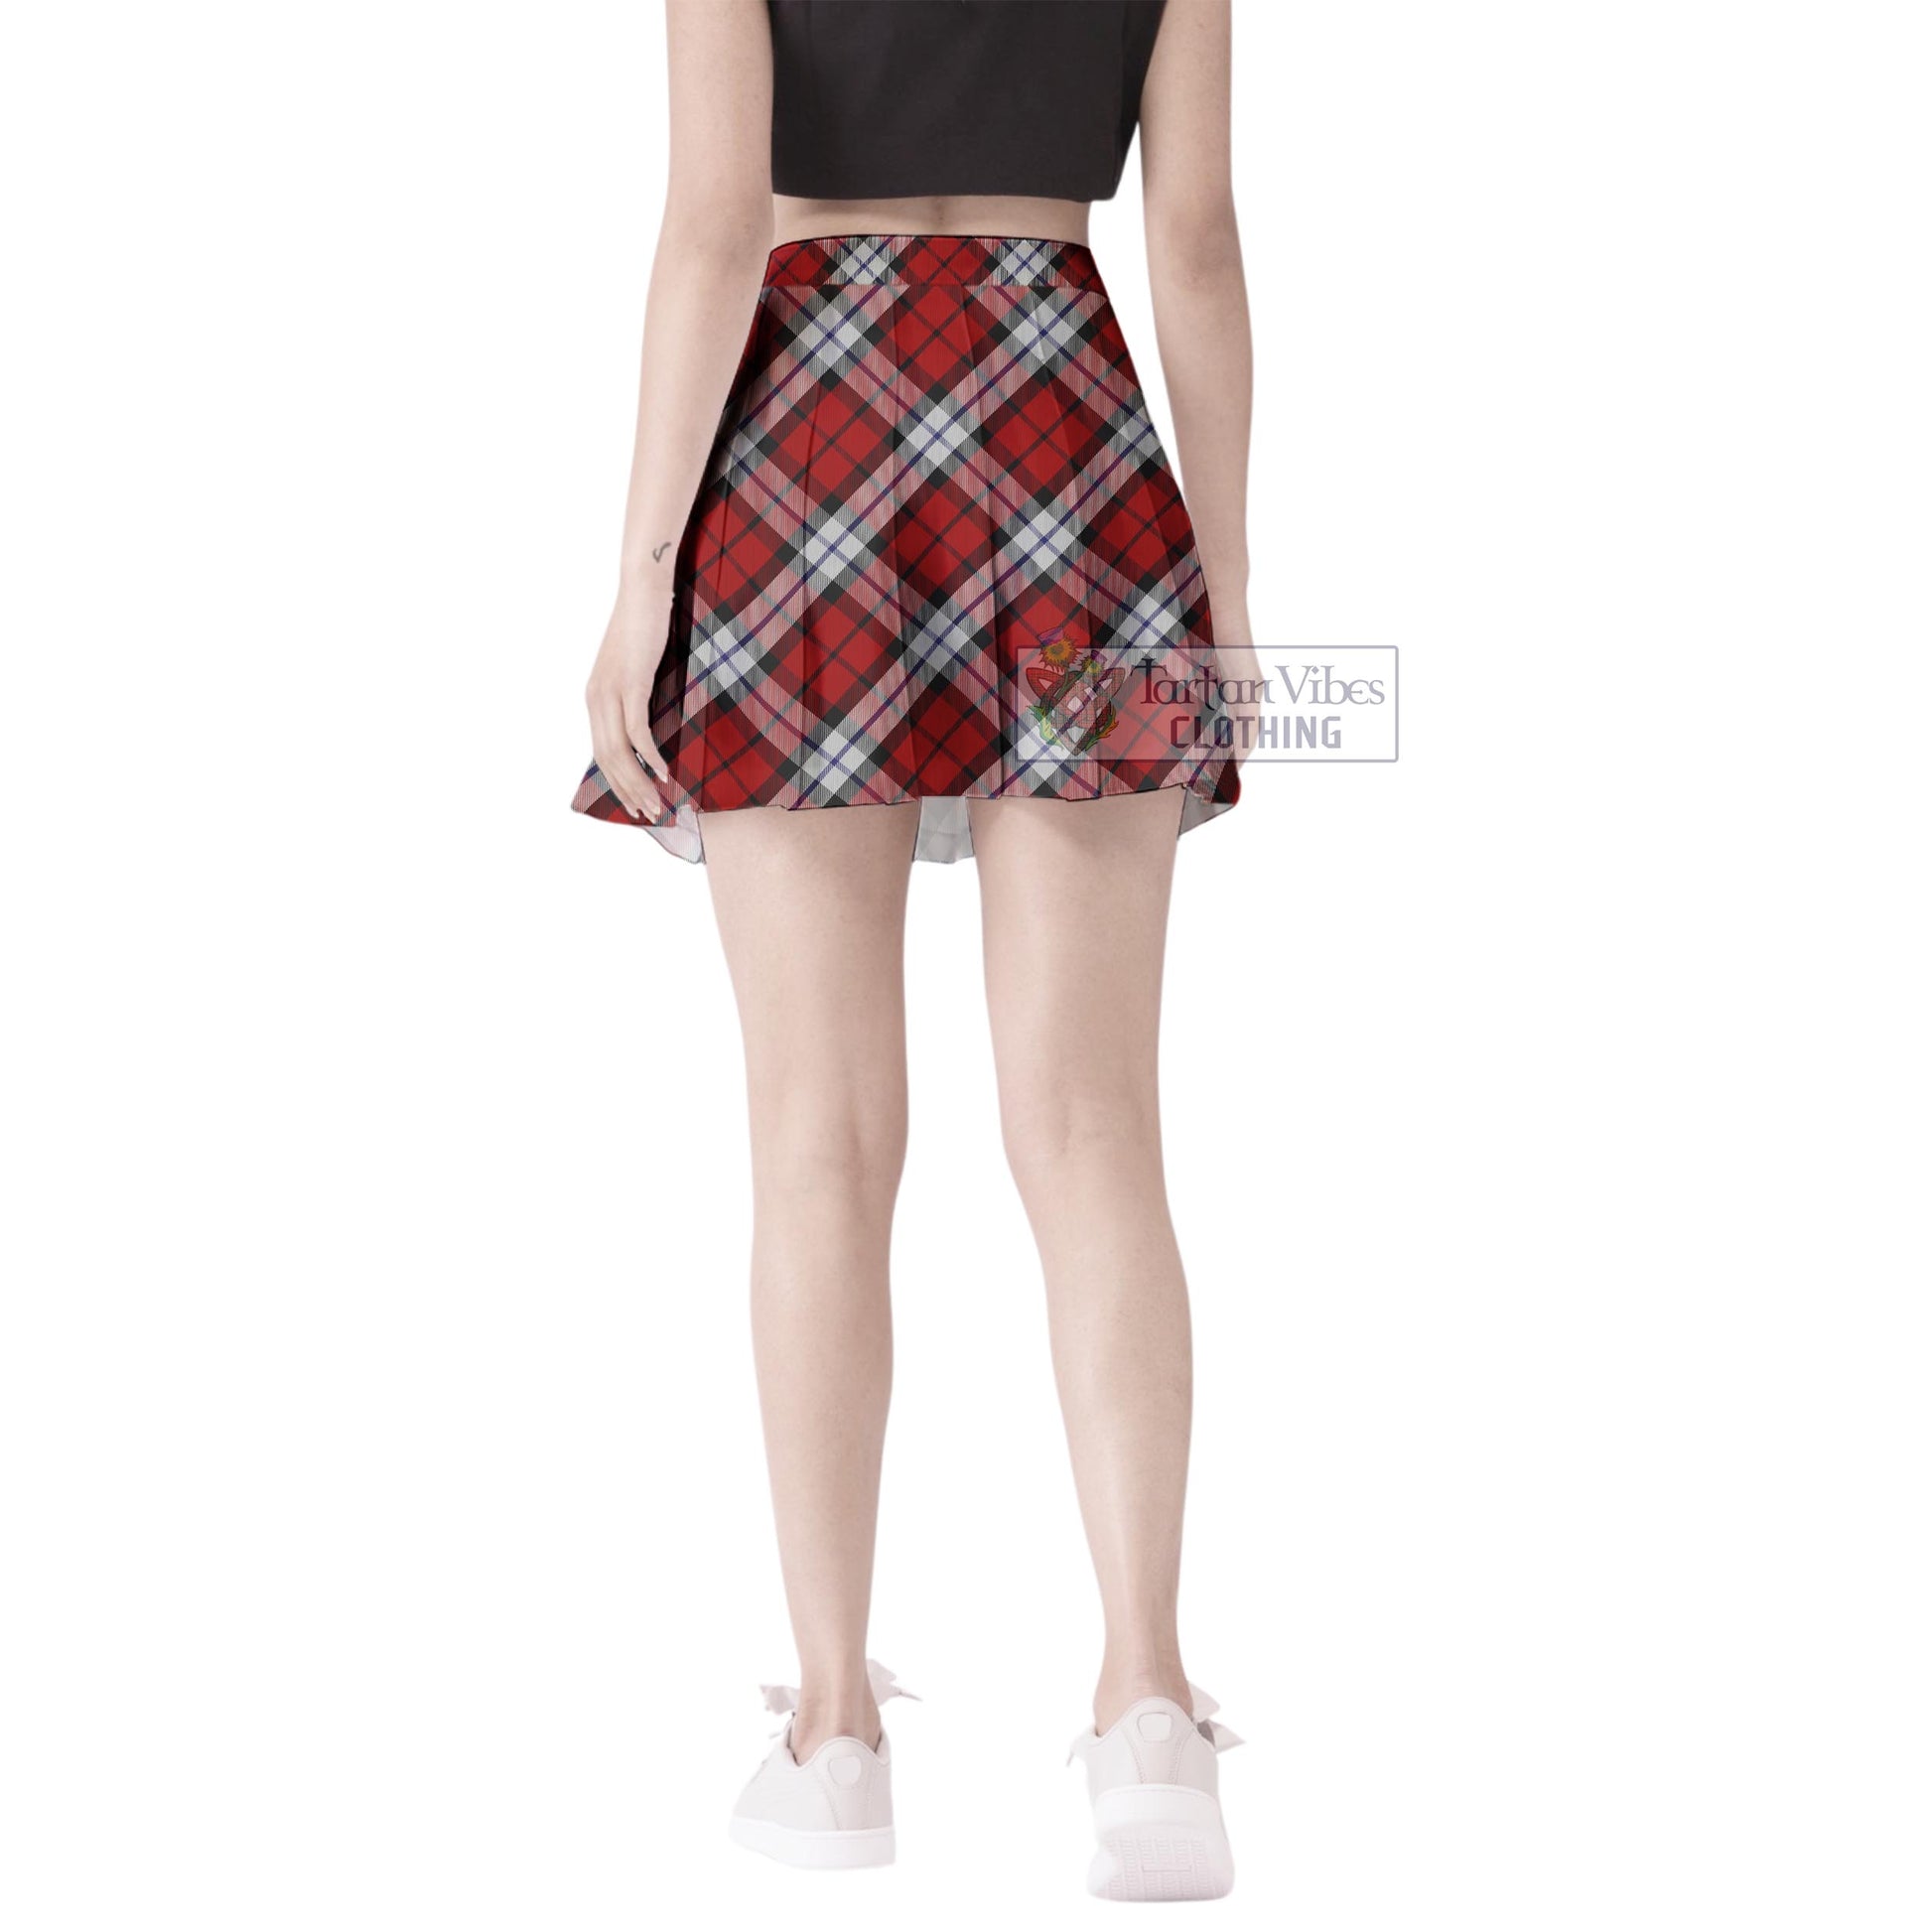 Tartan Vibes Clothing Brodie Dress Tartan Women's Plated Mini Skirt